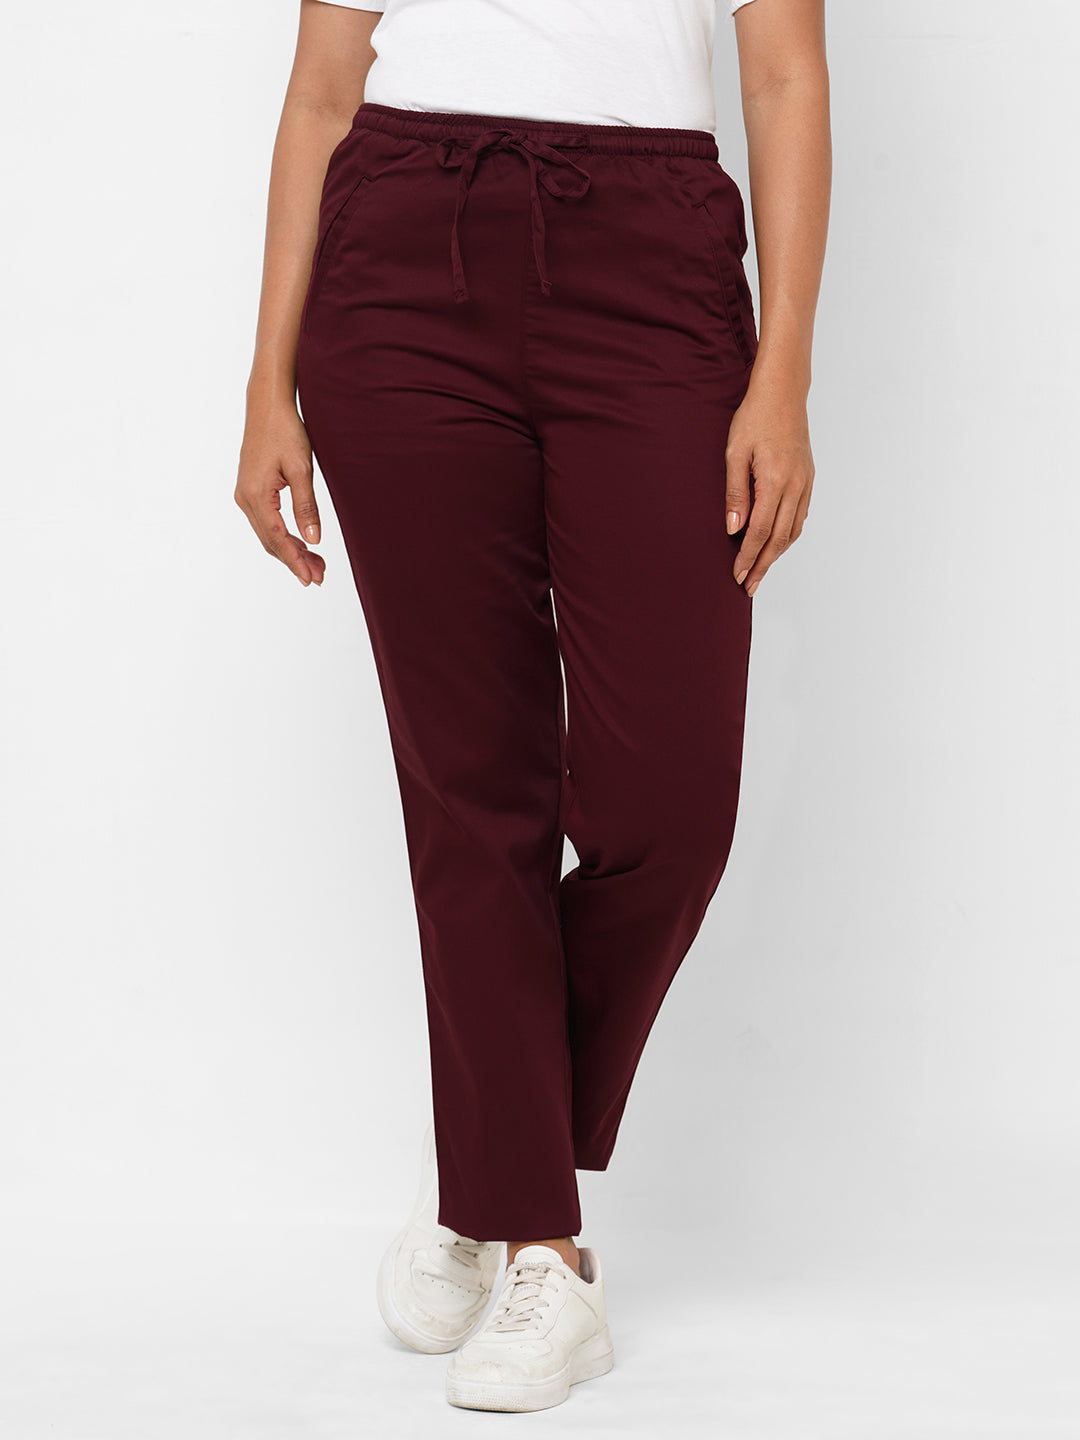 Women's Cotton Lycra Maroon/Red Regular Fit Pant